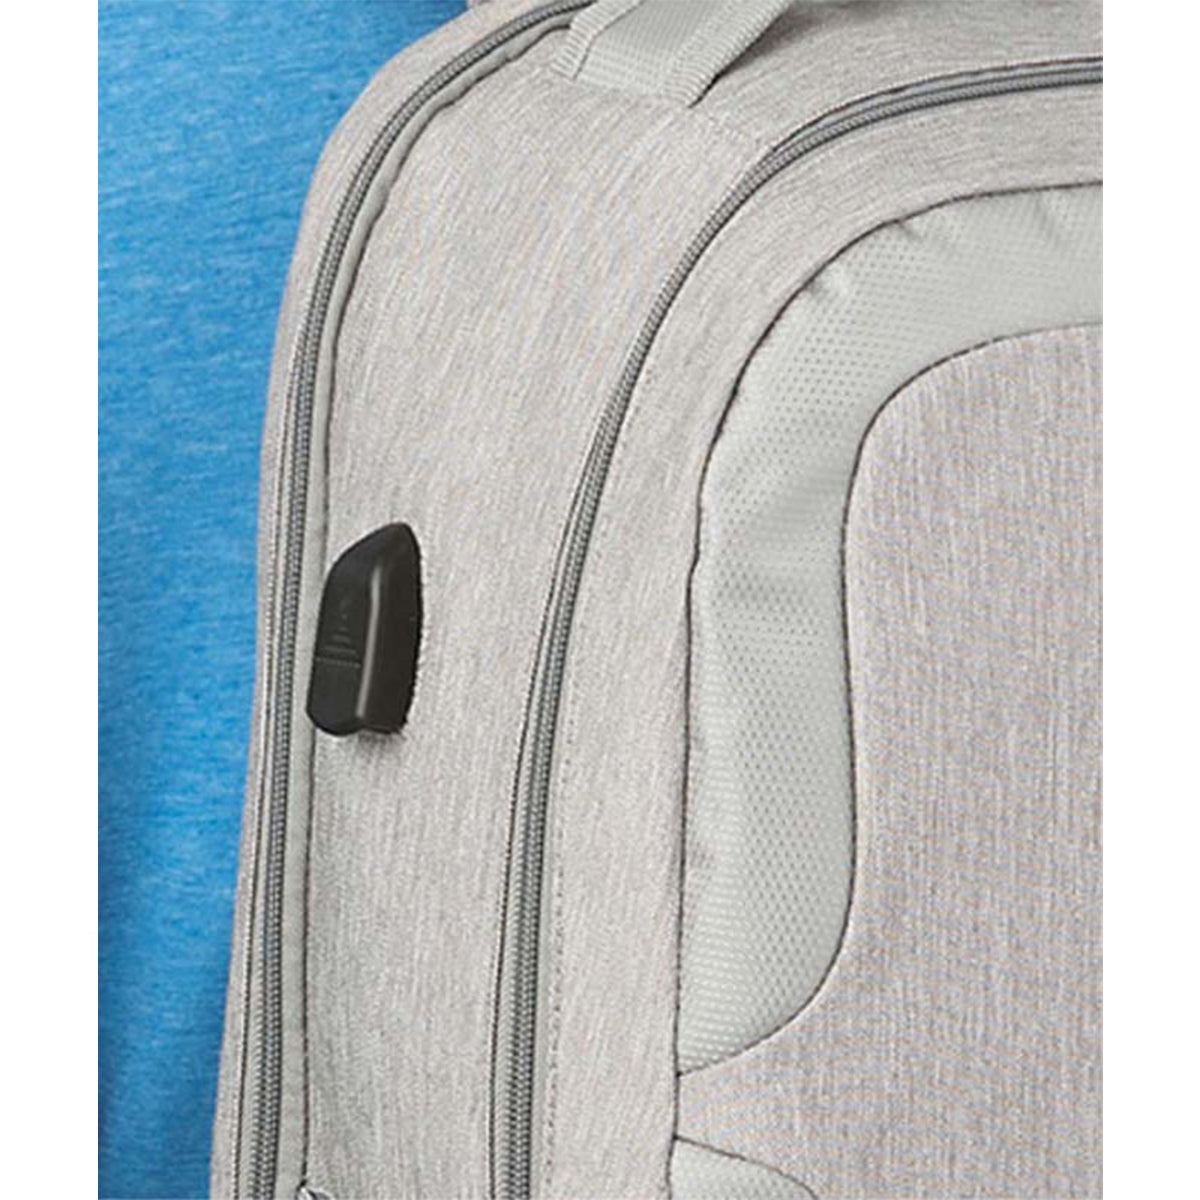 TSA Computer Backpack with USB Port